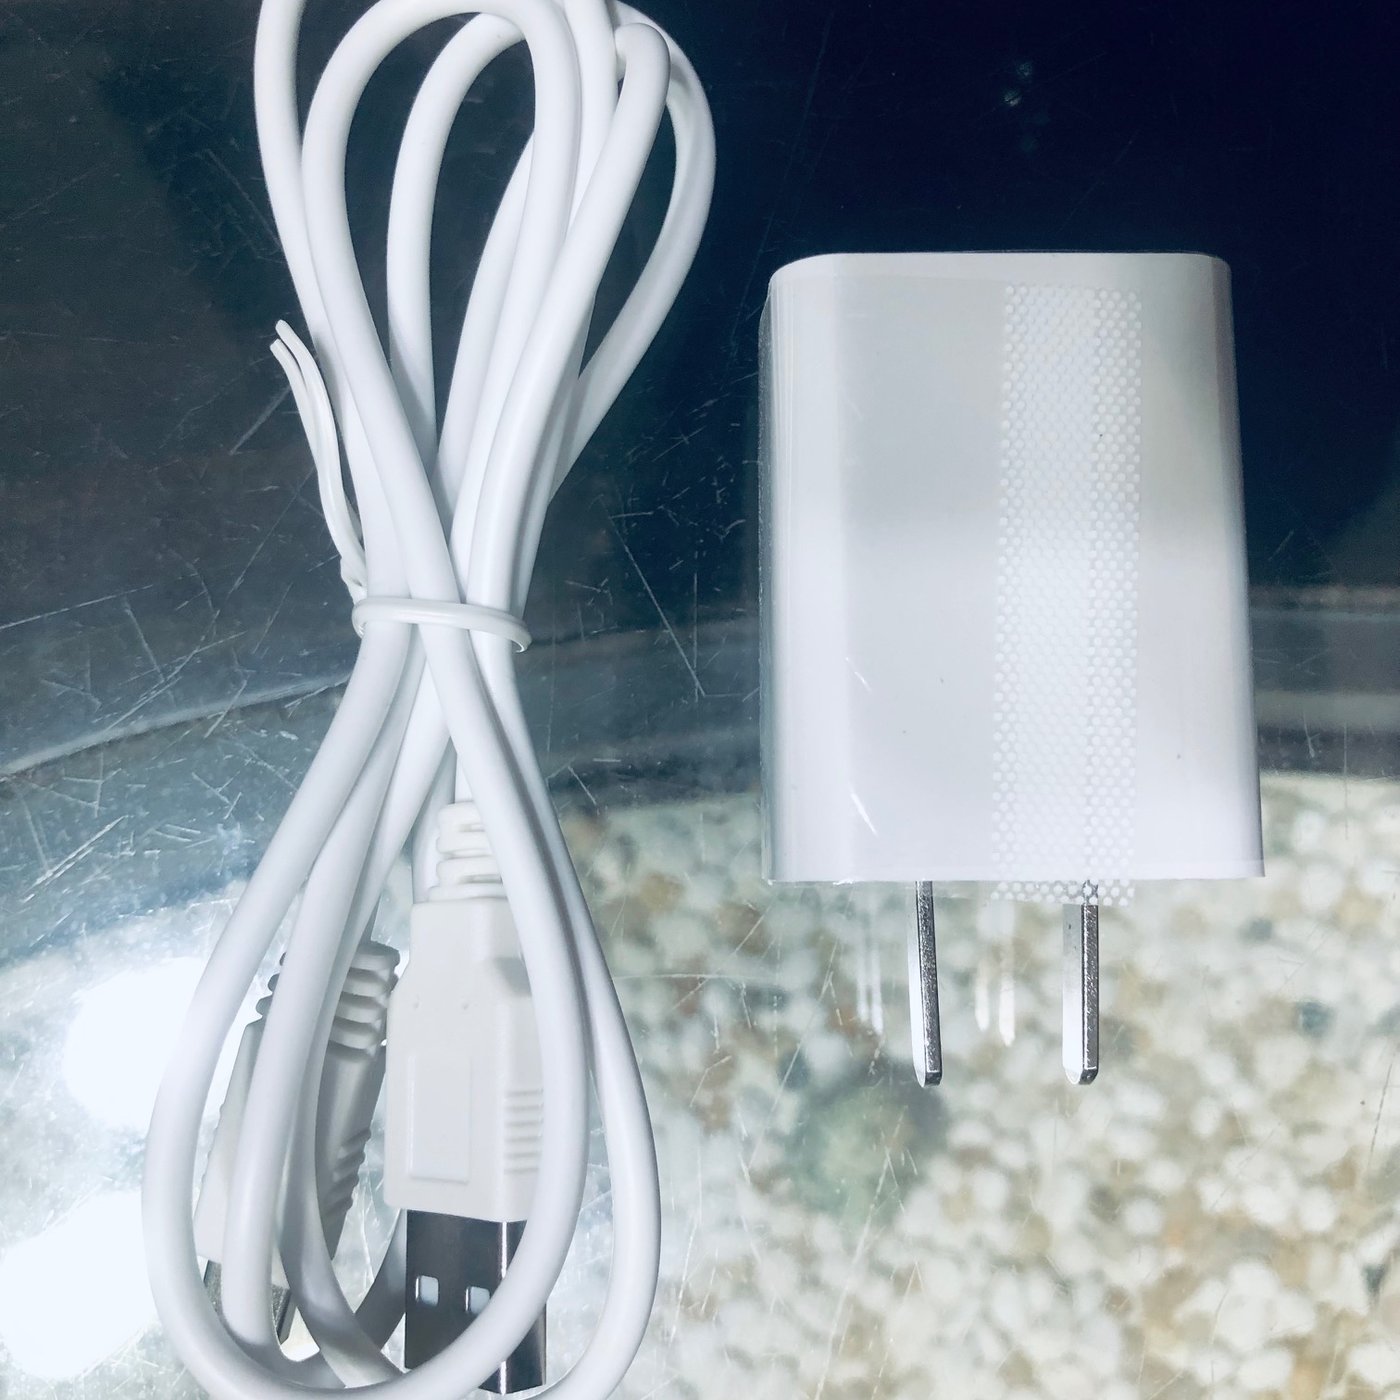 Wii U Wiiu Gamepad Pad充電線簡易型液晶手把直充電源適配器供電器電源線wiiu Pad 變壓器簡易型 Yahoo奇摩拍賣